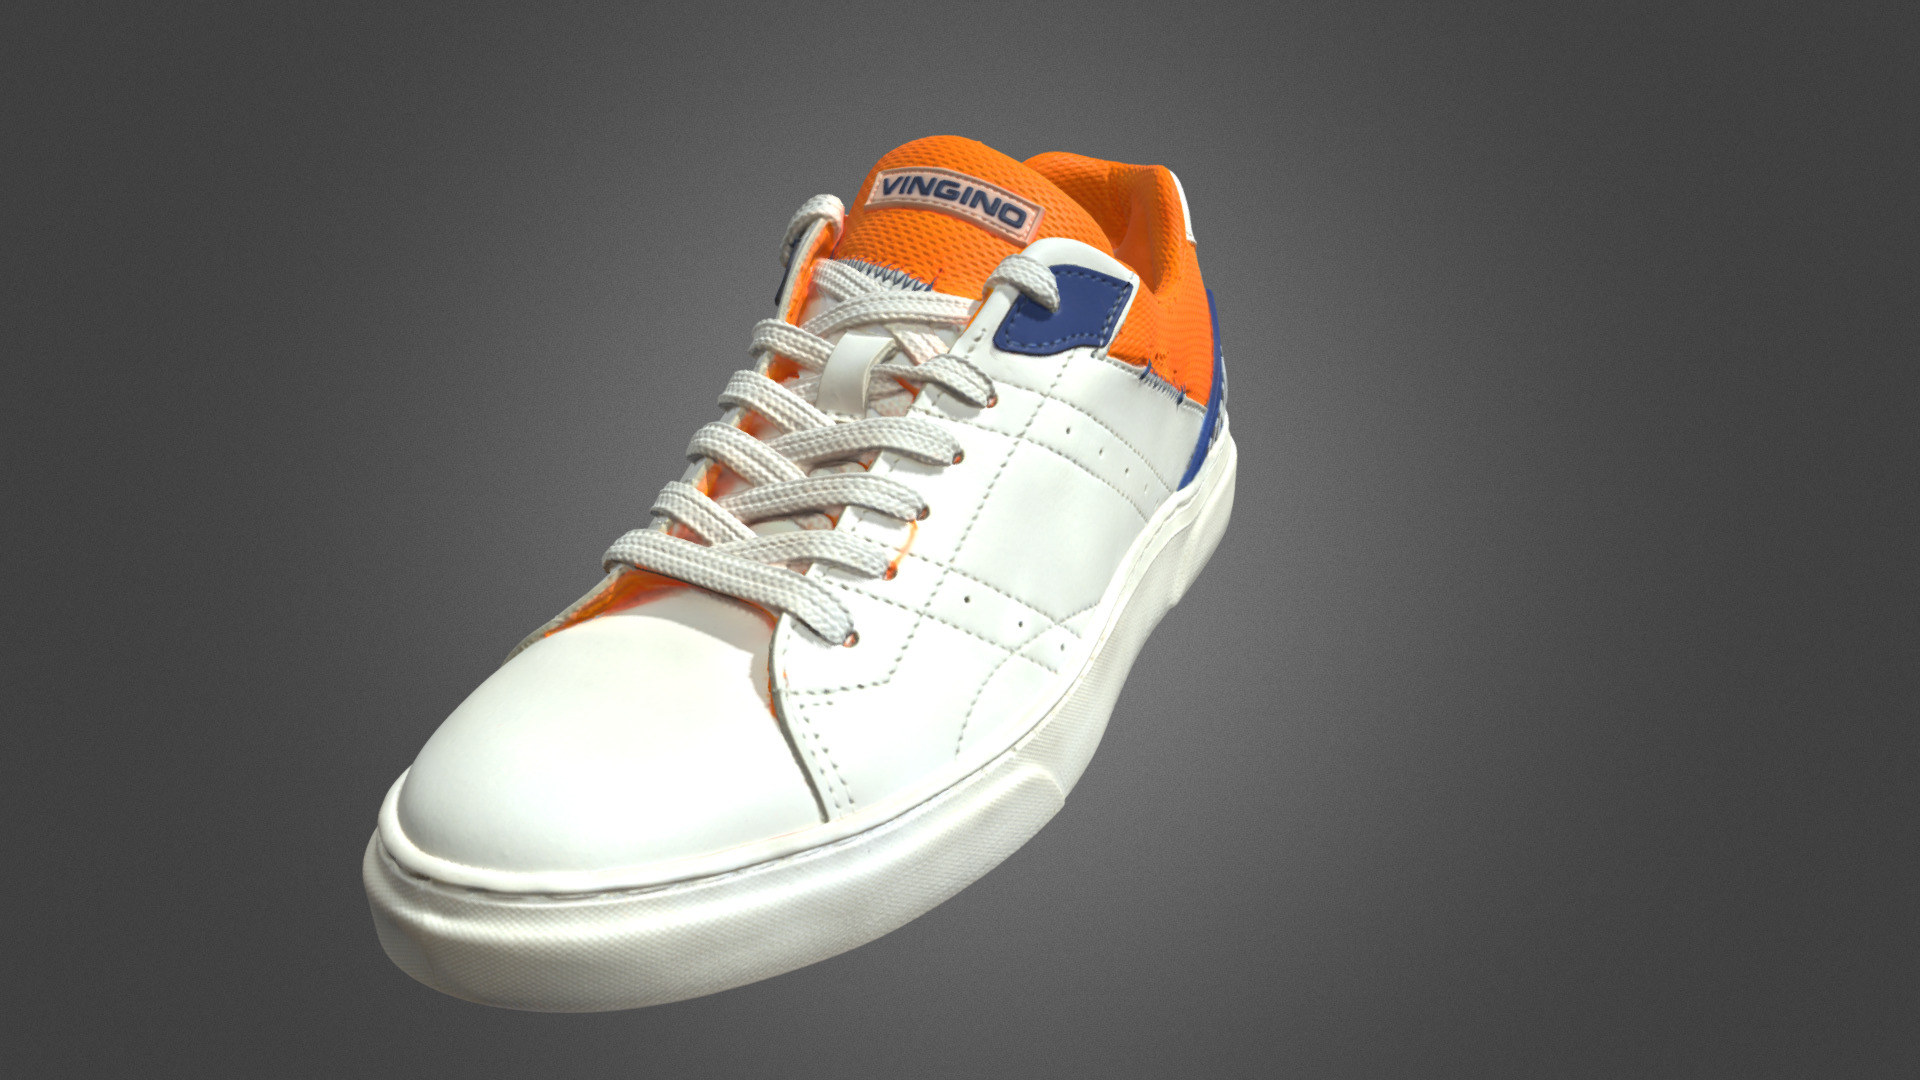 3D model Vingino Sergio - This is a 3D model of the Vingino Sergio. The 3D model is about a white and orange shoe.